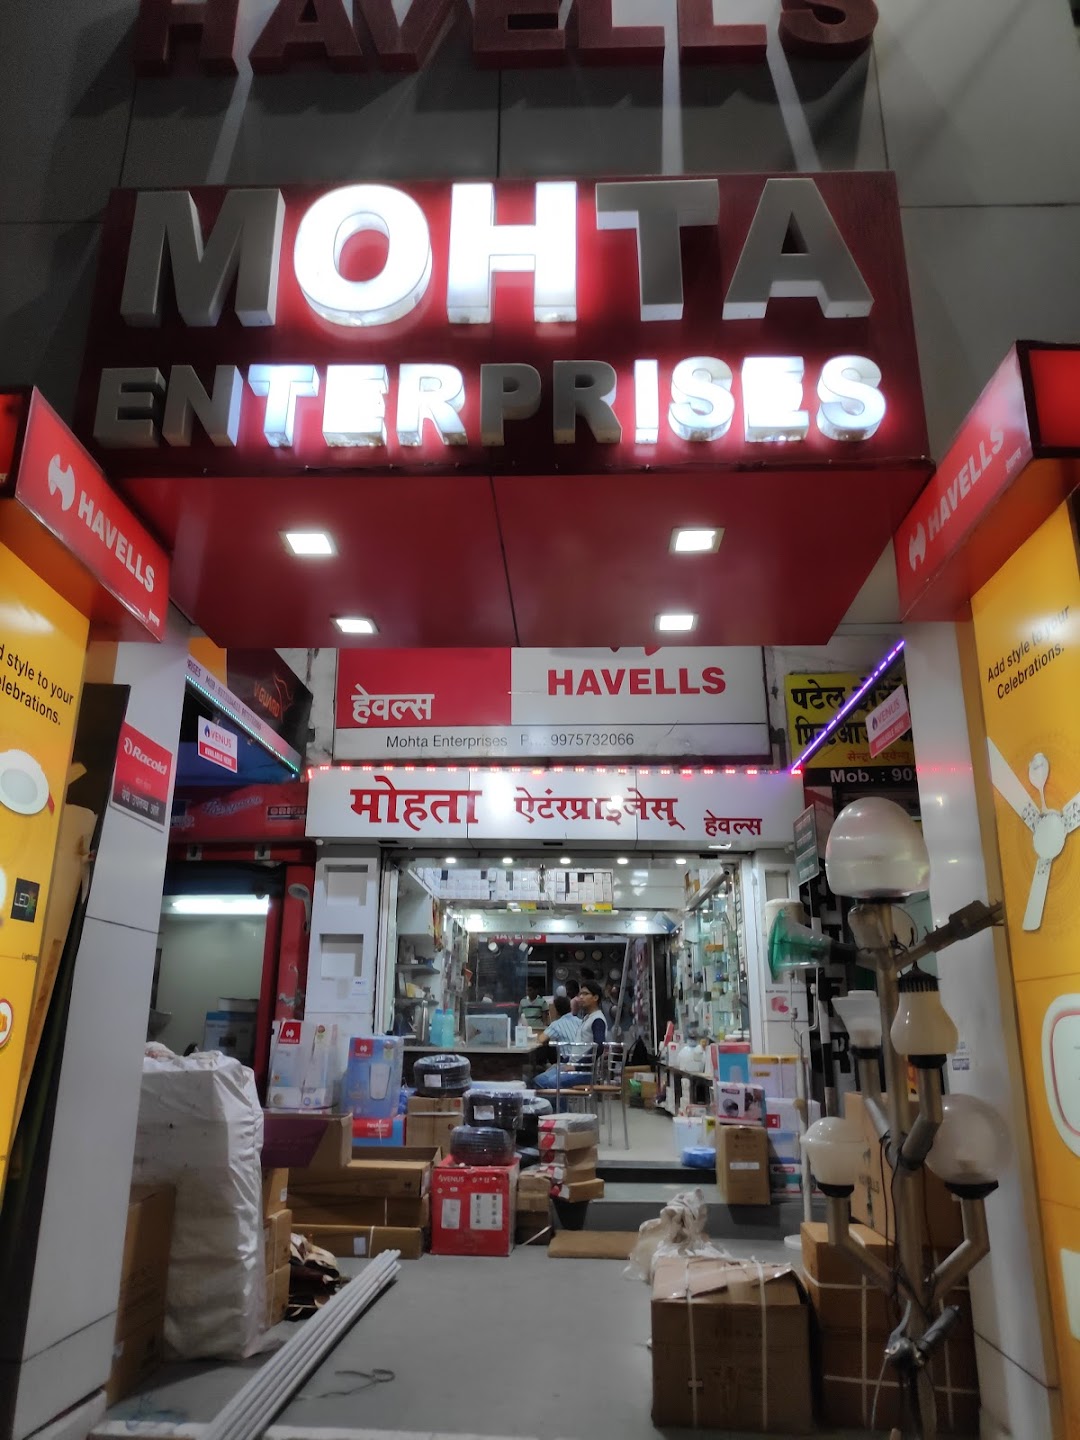 Mohta Enterprises